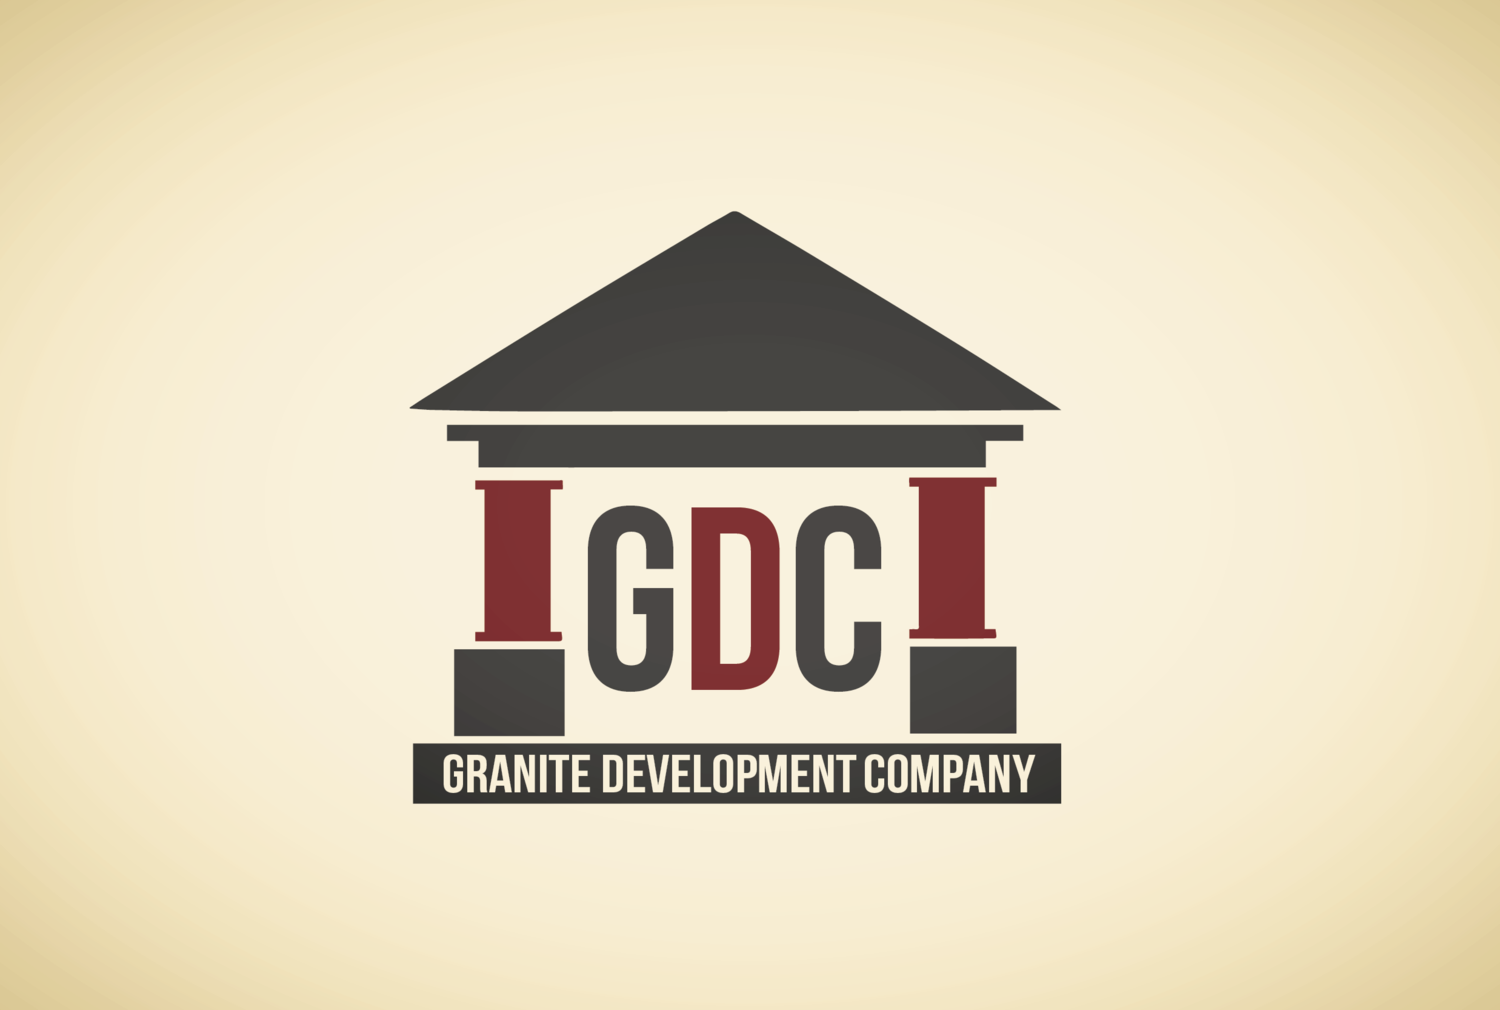 Granite Development